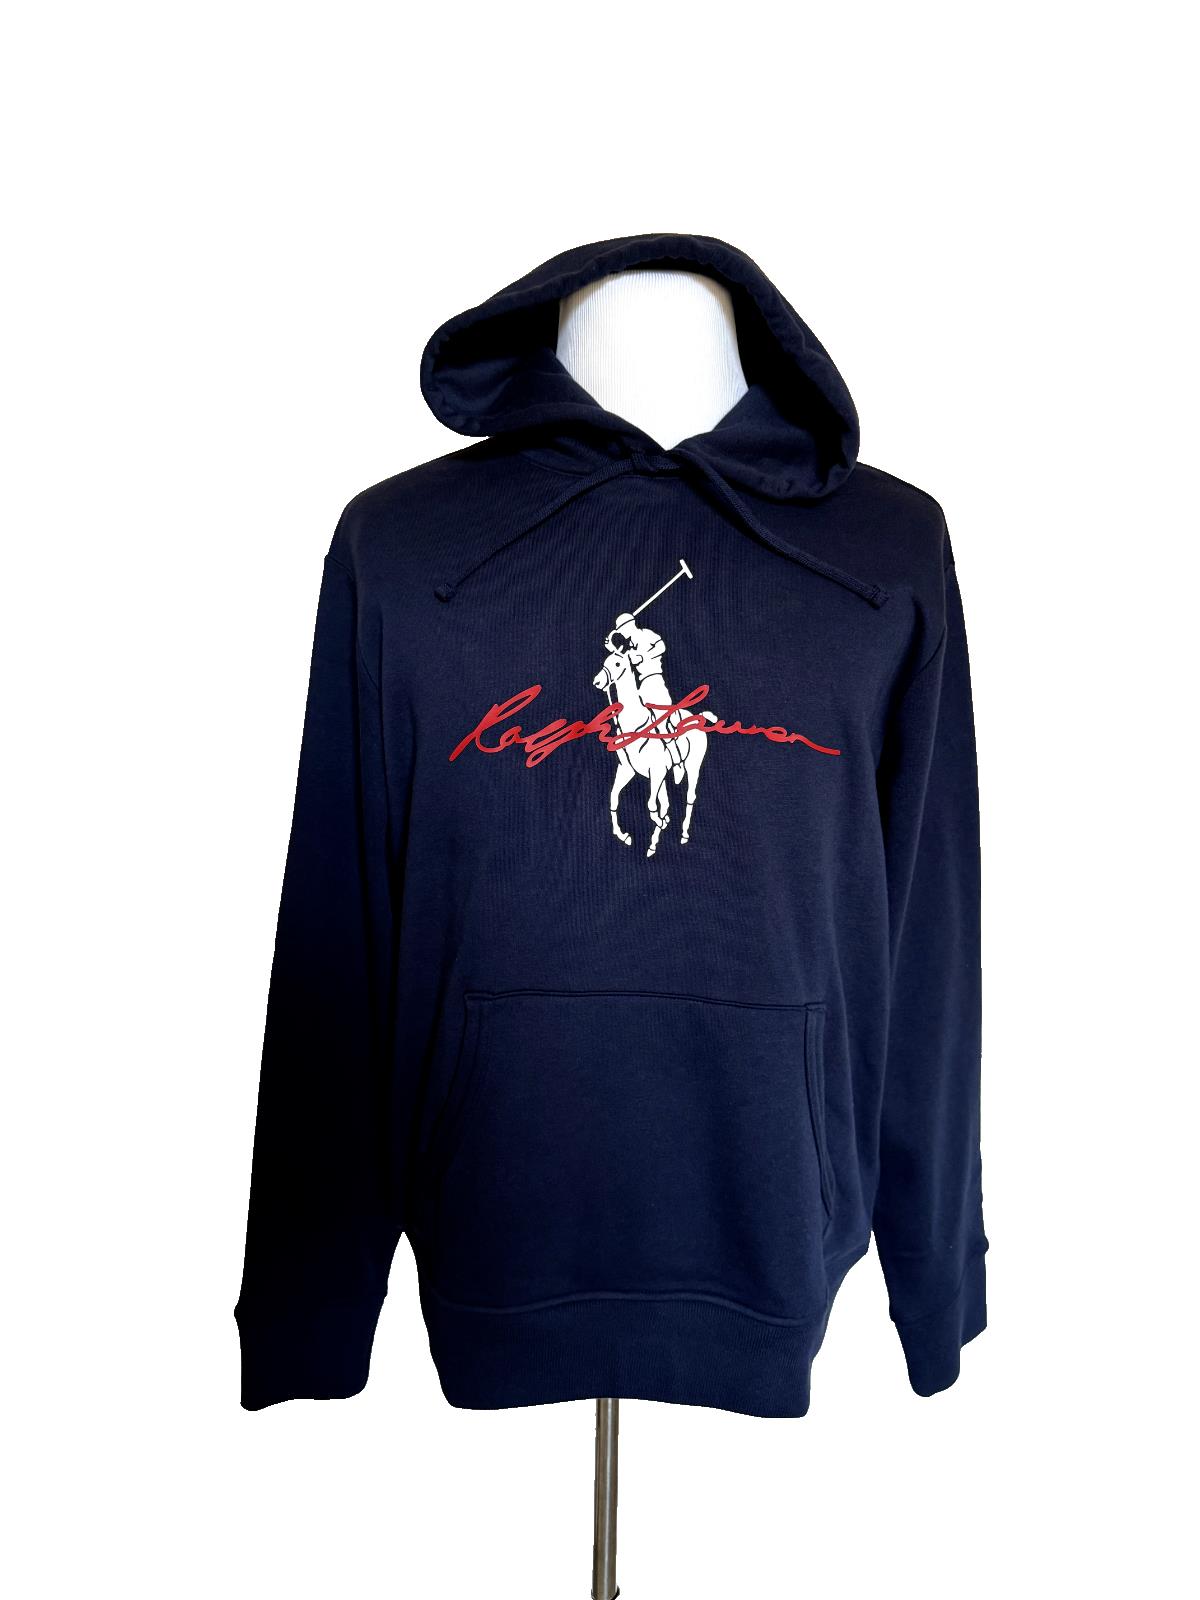 NWT $198 Polo Ralph Lauren Signature Big Pony Long Sleeve Fleece Hoodie Navy L